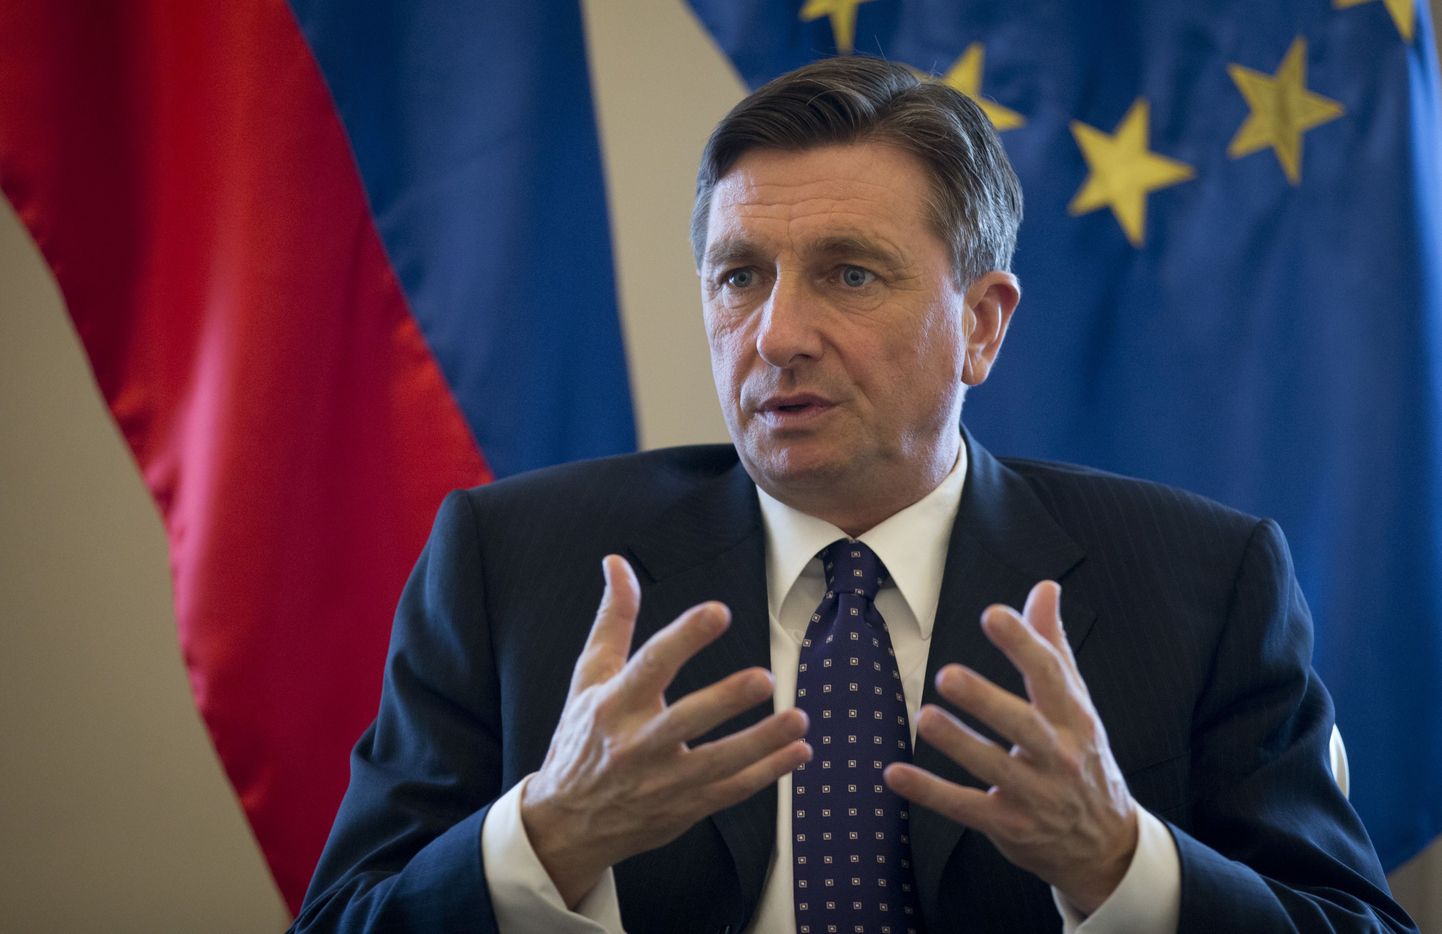 Sloveenia president Borut Pahor